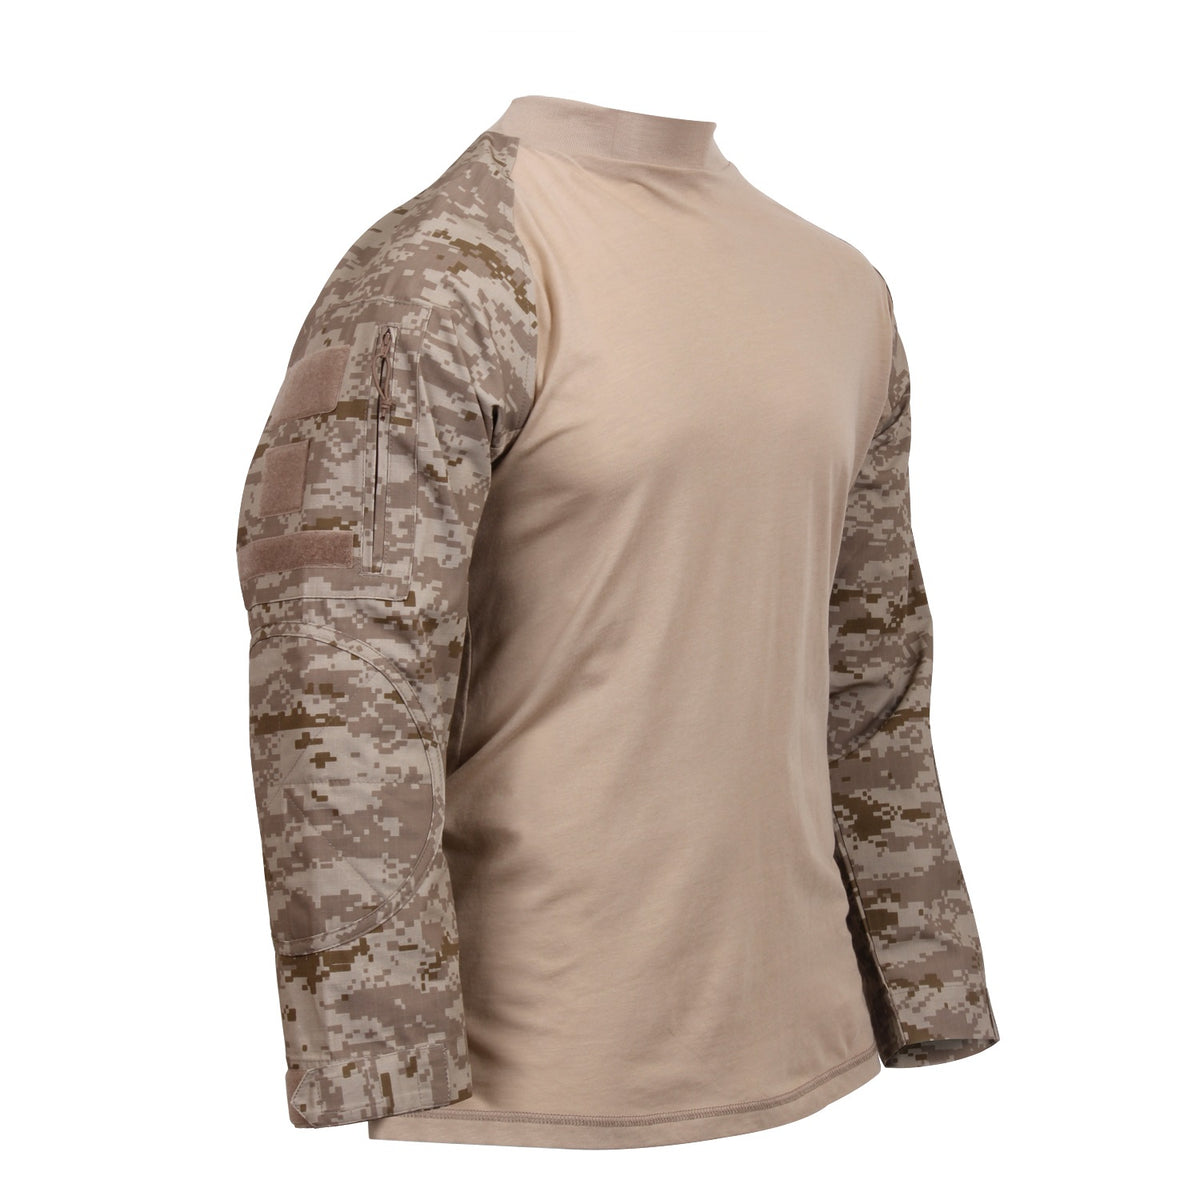 CLEARANCE - Rothco Tactical Airsoft Combat Shirt